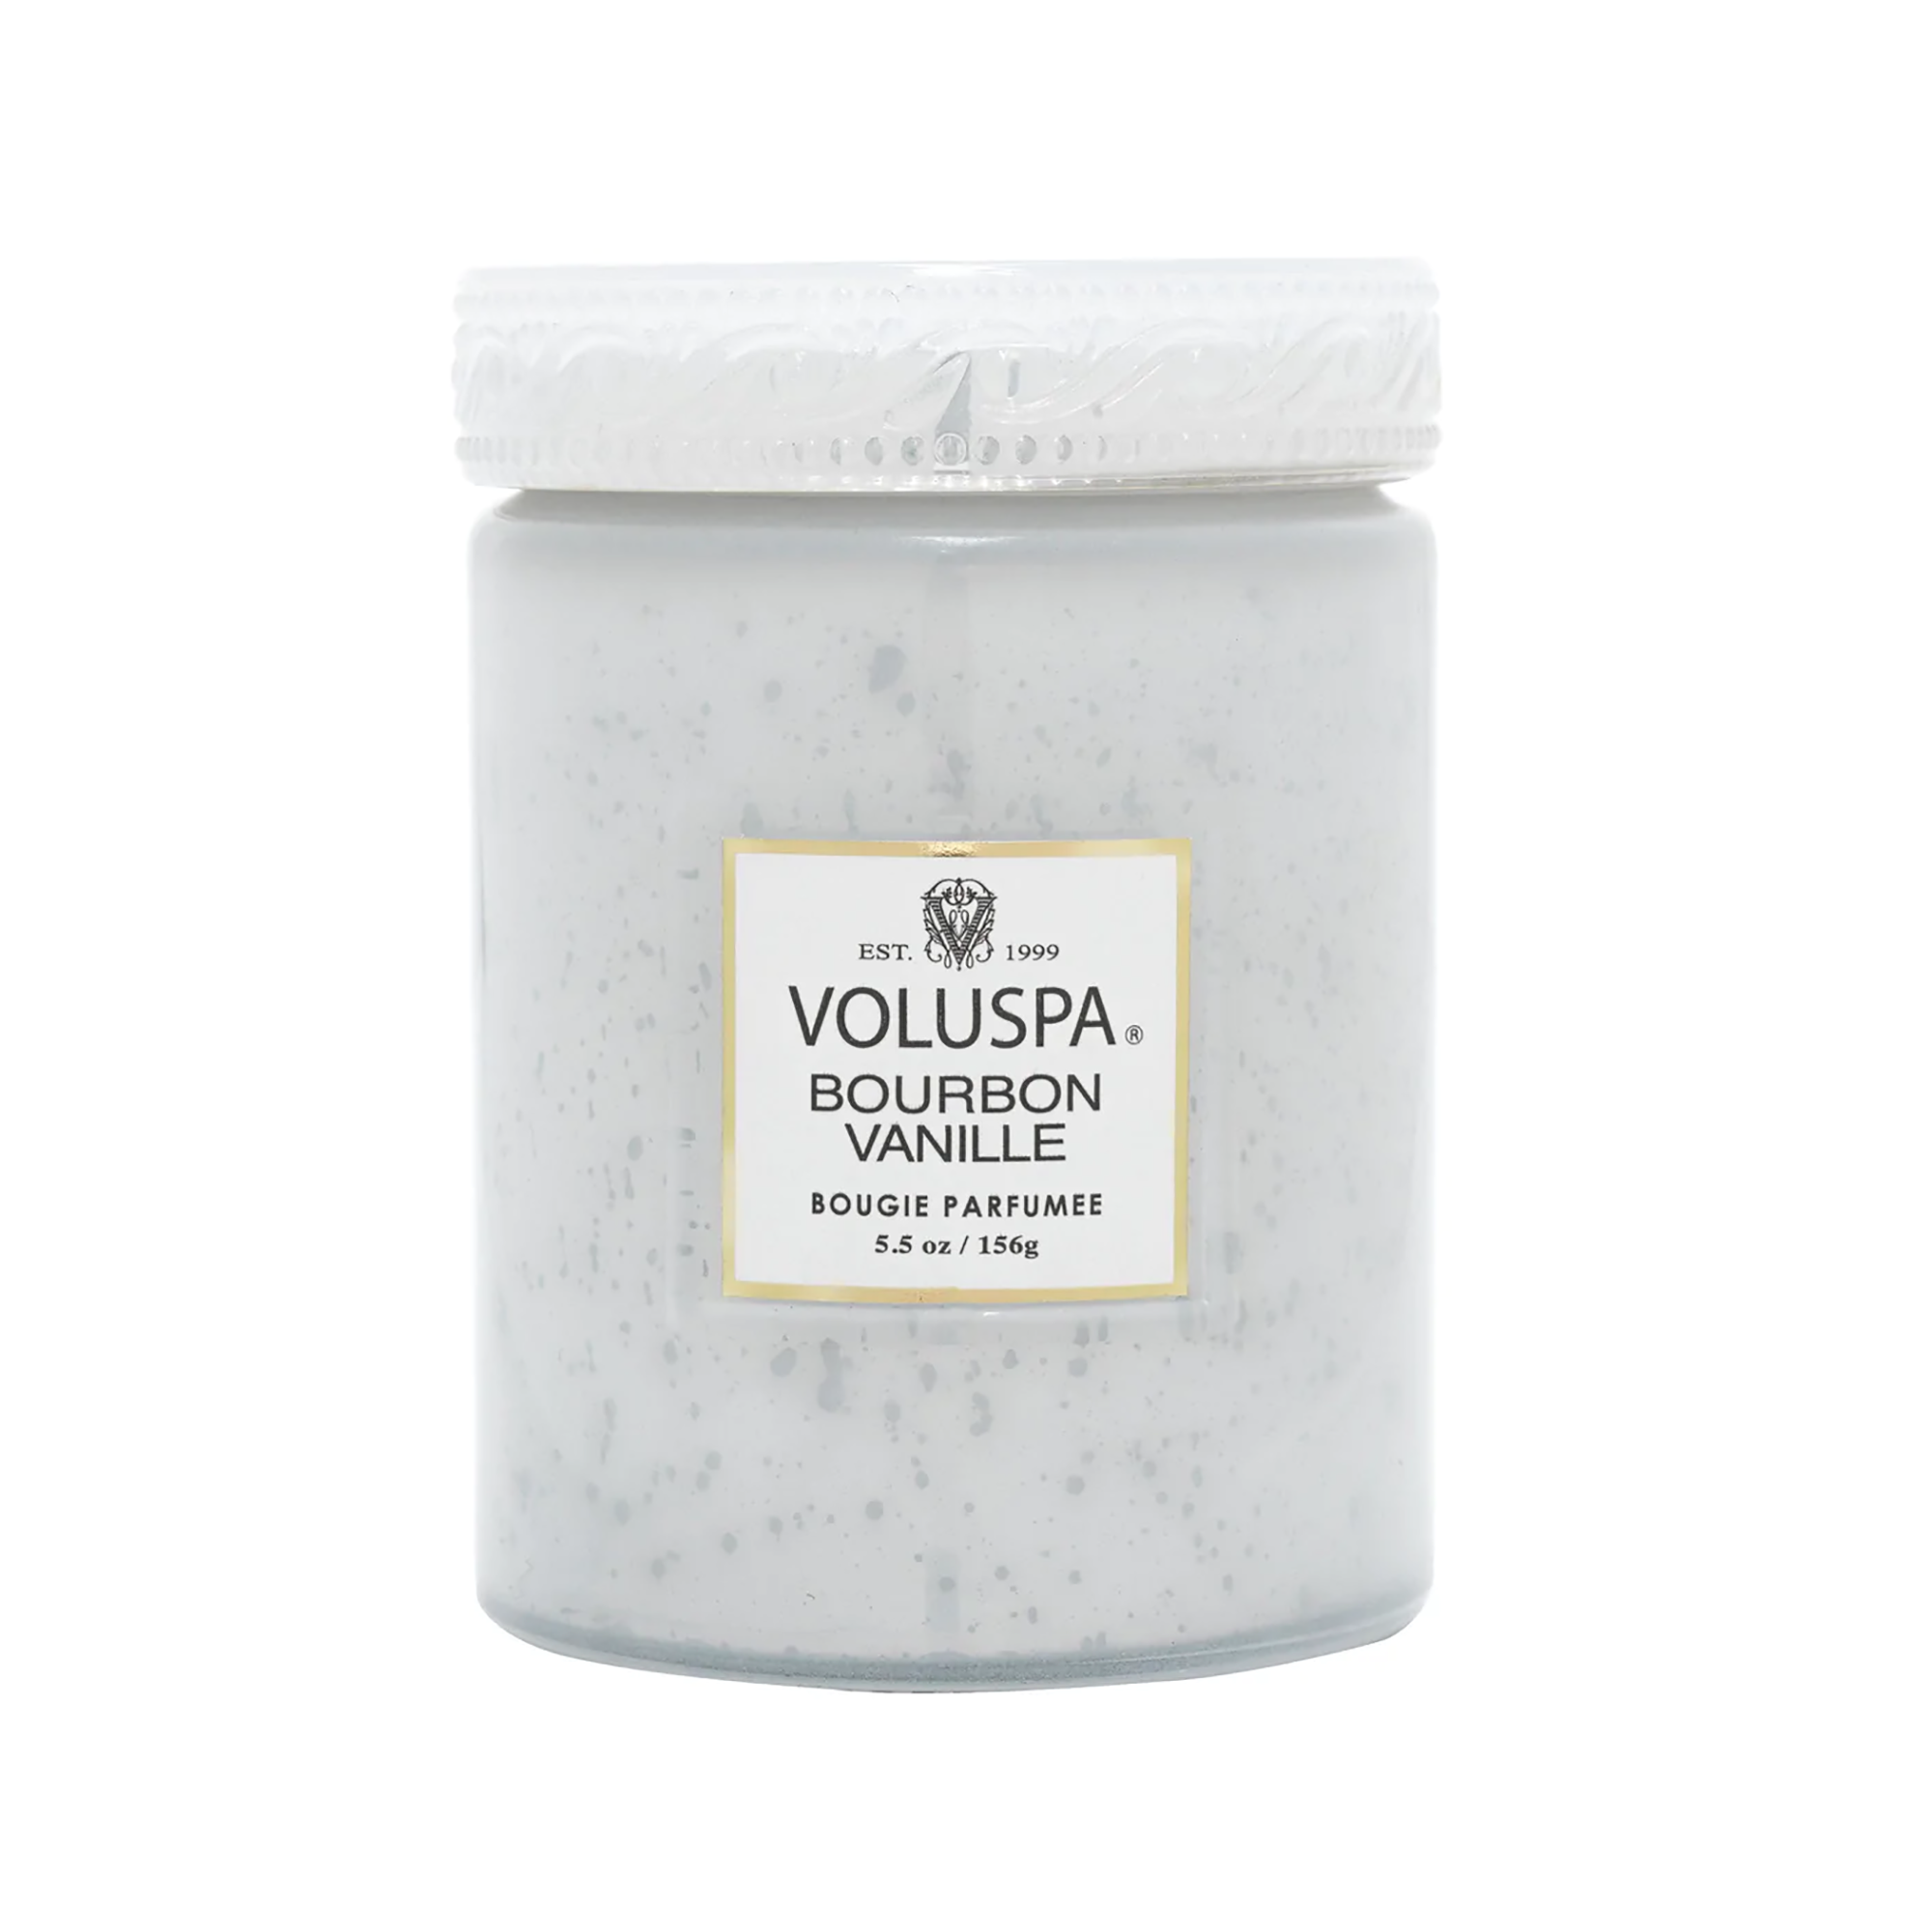  Voluspa Small Jar Candle / Bourbon Vanille